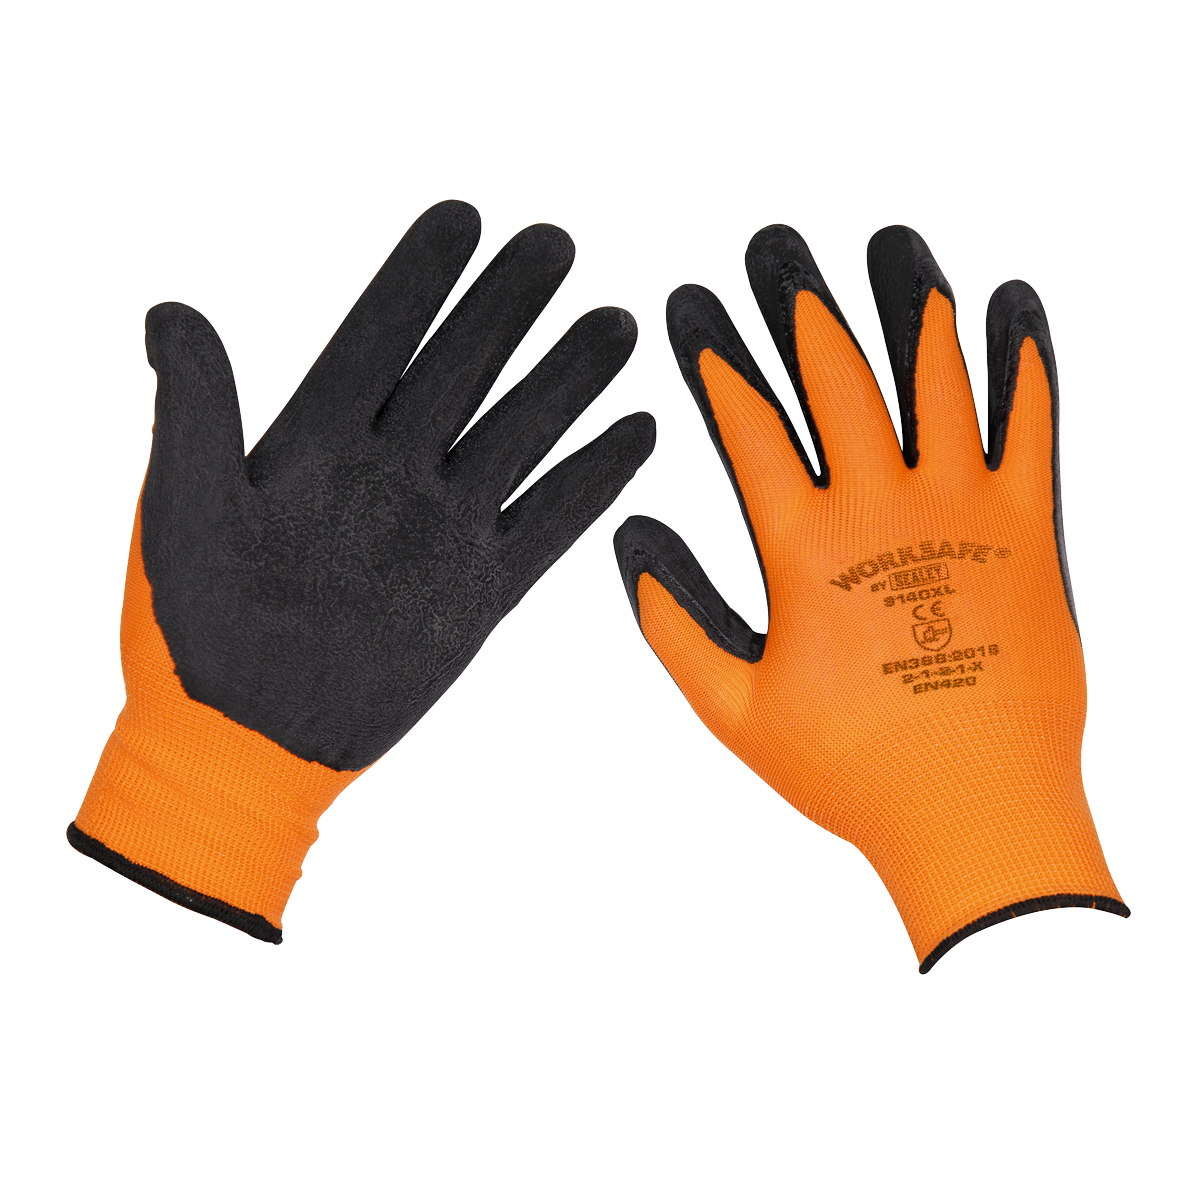 Sealey Foam Latex Grippa Gloves (X-Large) - Pack of 120 Pairs 9140XL/B120